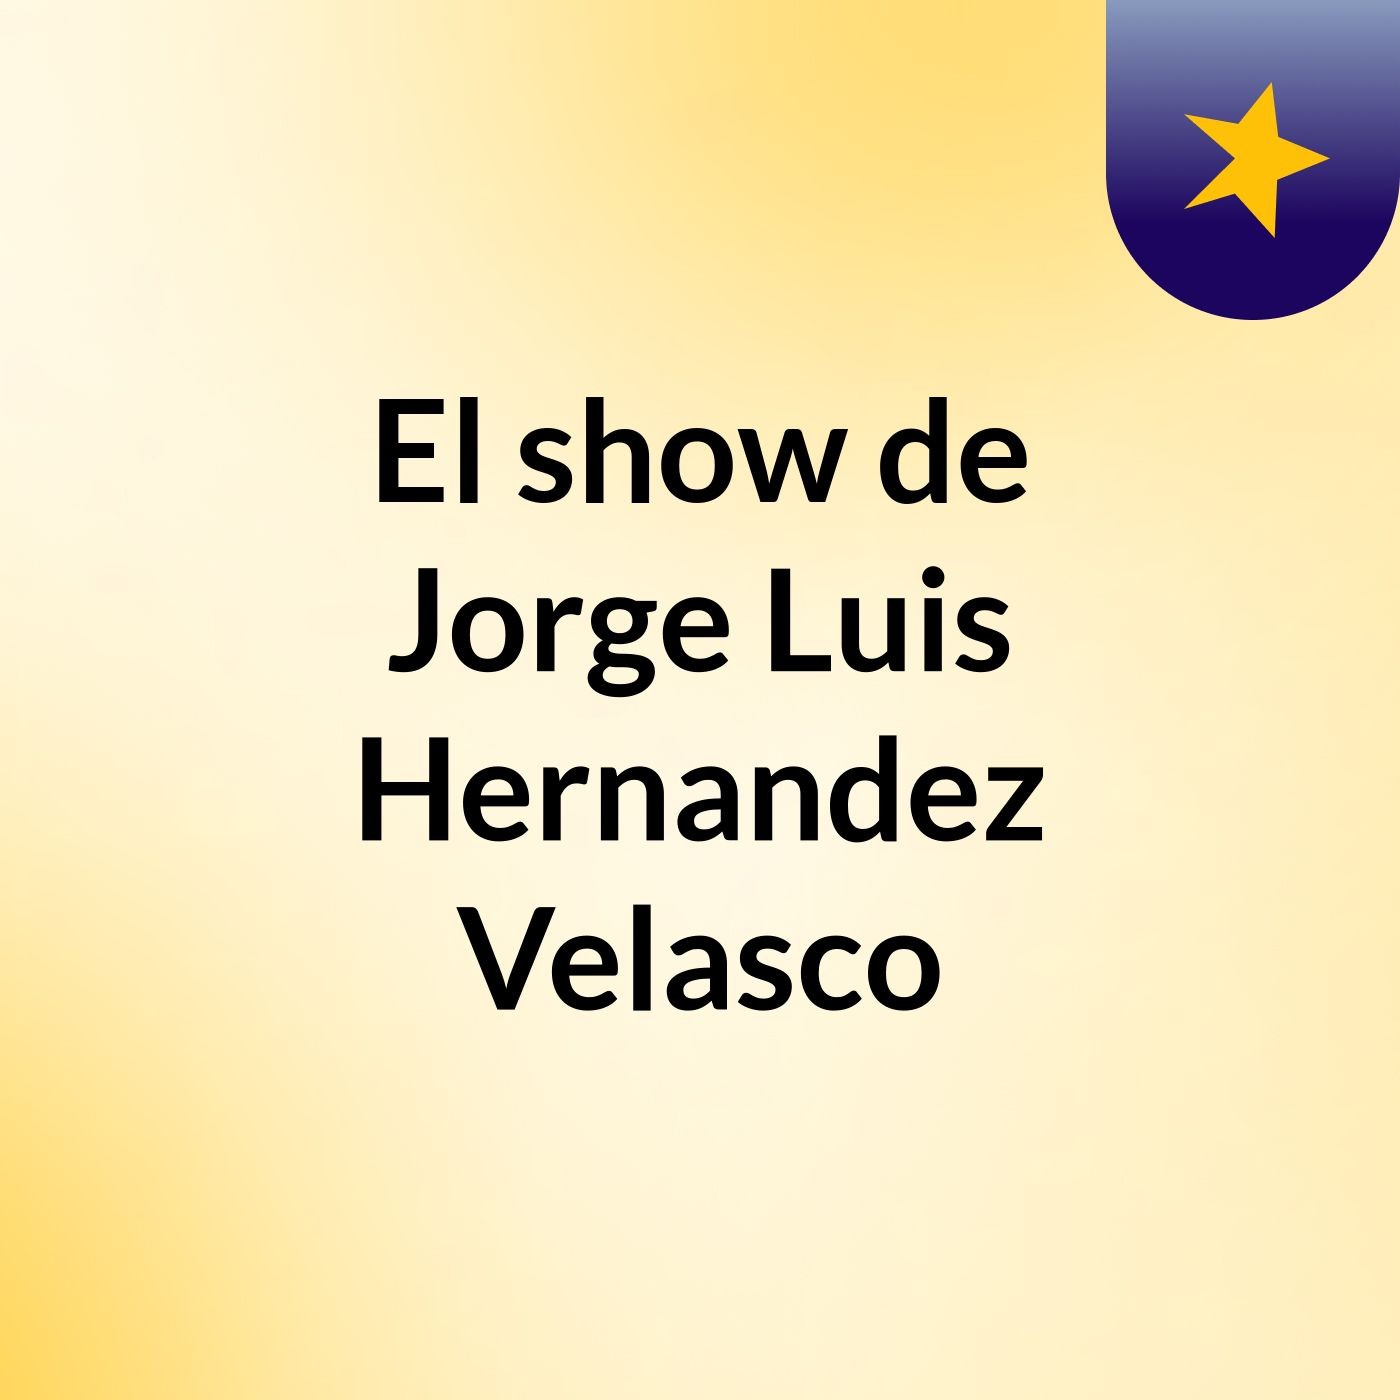 El show de Jorge Luis Hernandez Velasco